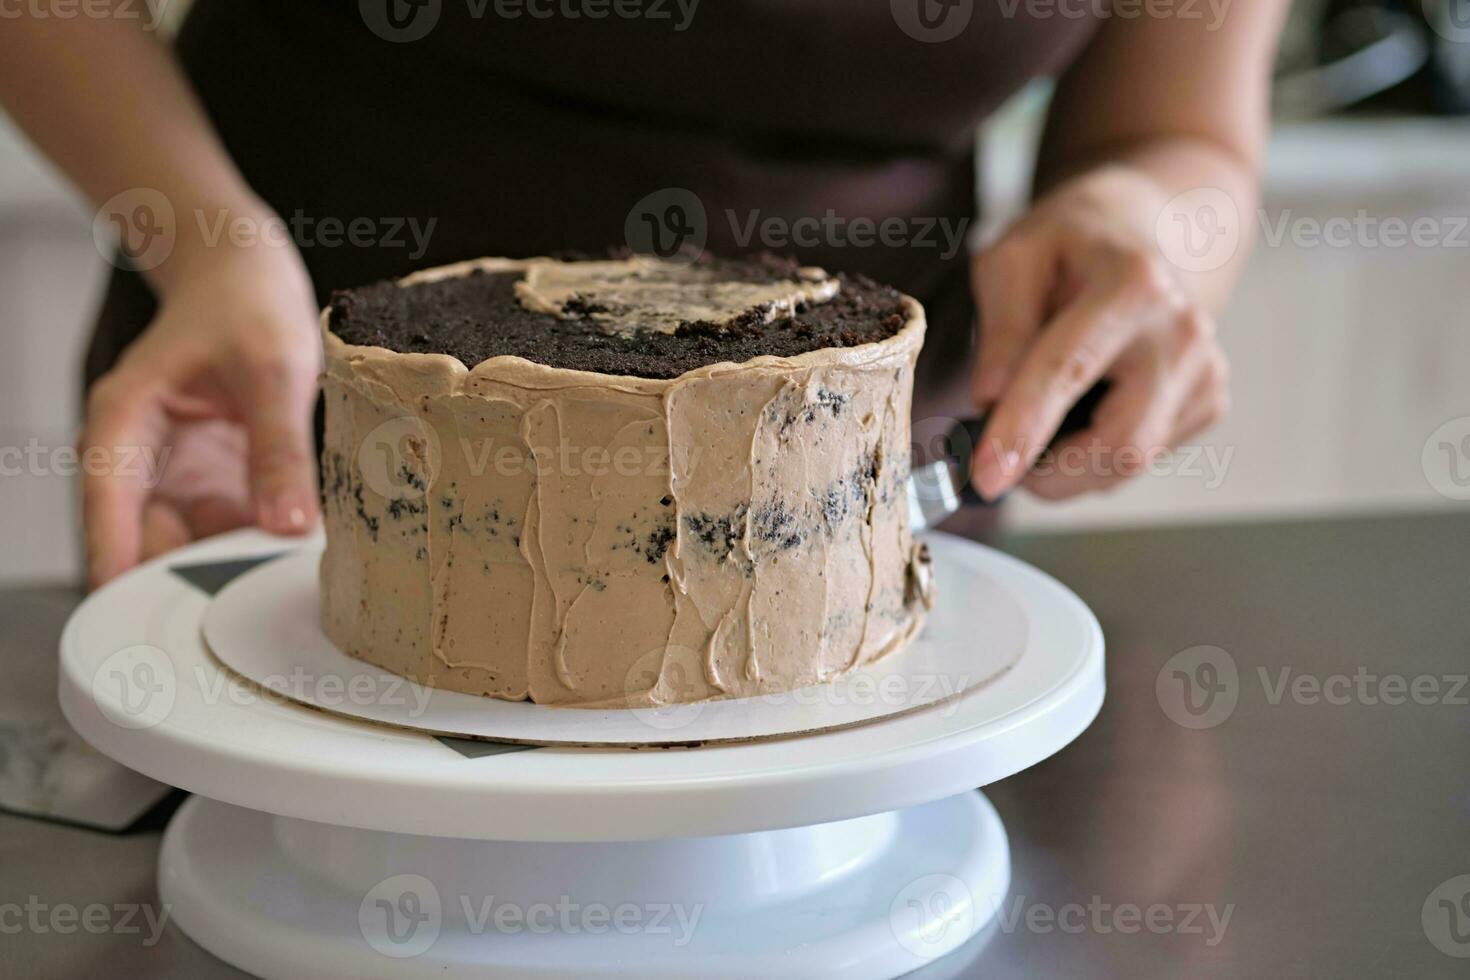 kvinna bakverk kock framställning choklad kaka med choklad grädde, närbild. kaka framställning bearbeta, selektiv fokus foto